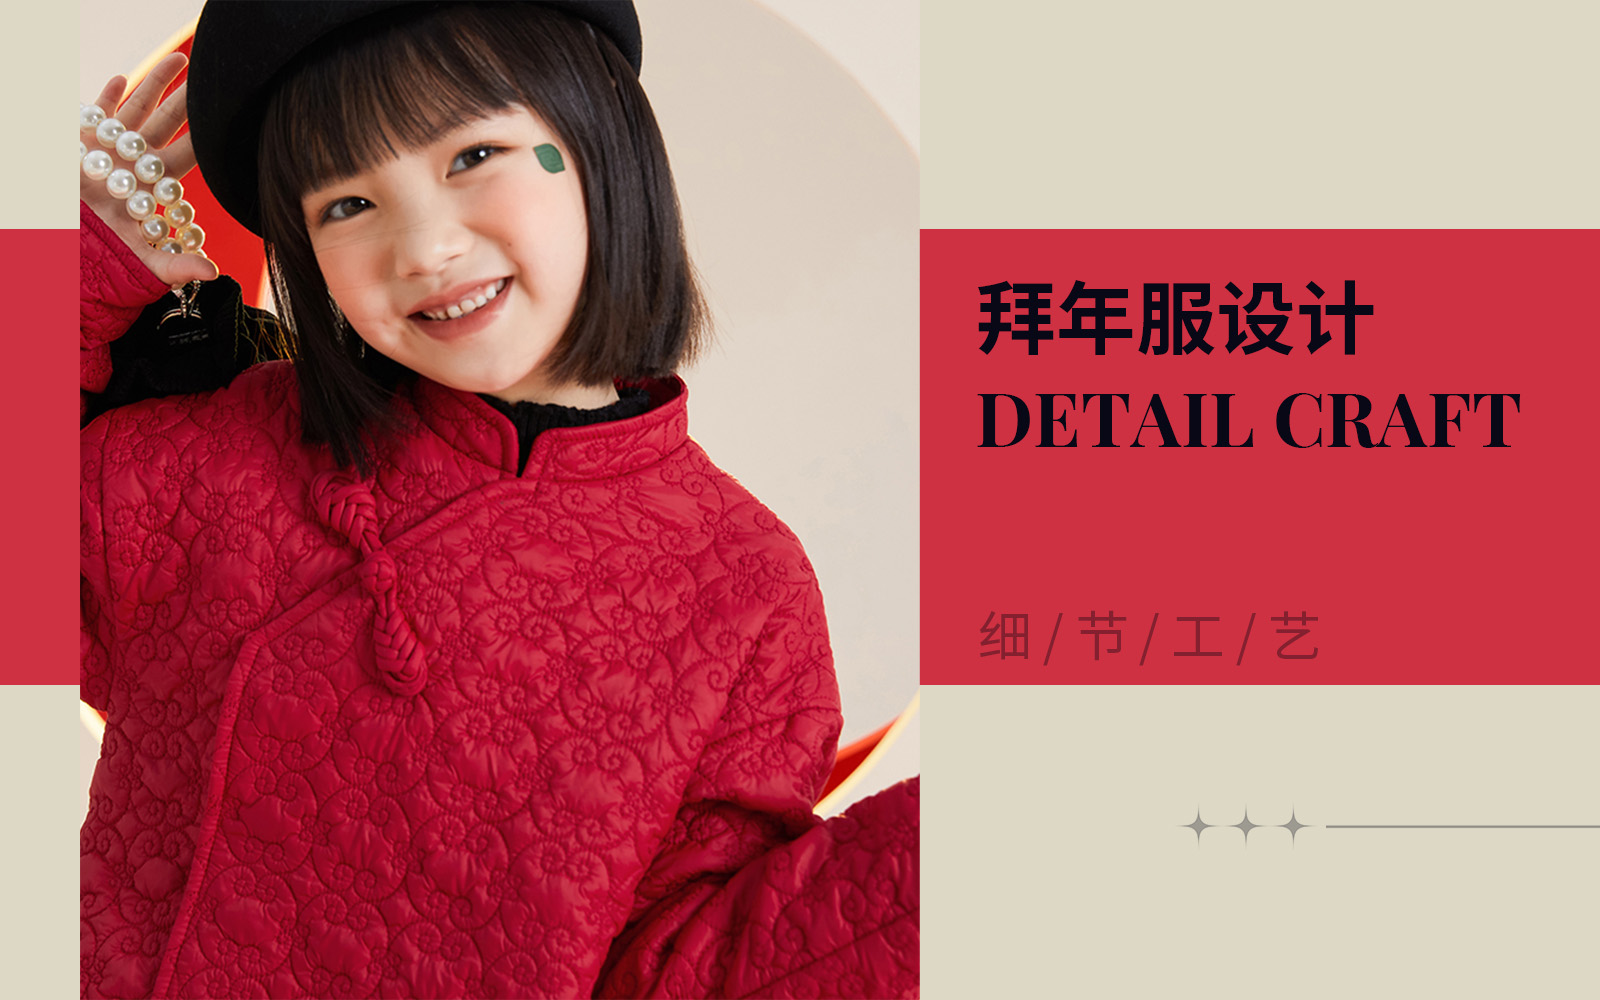 Festive Hanfu -- The Detail & Craft Trend for Kidswear